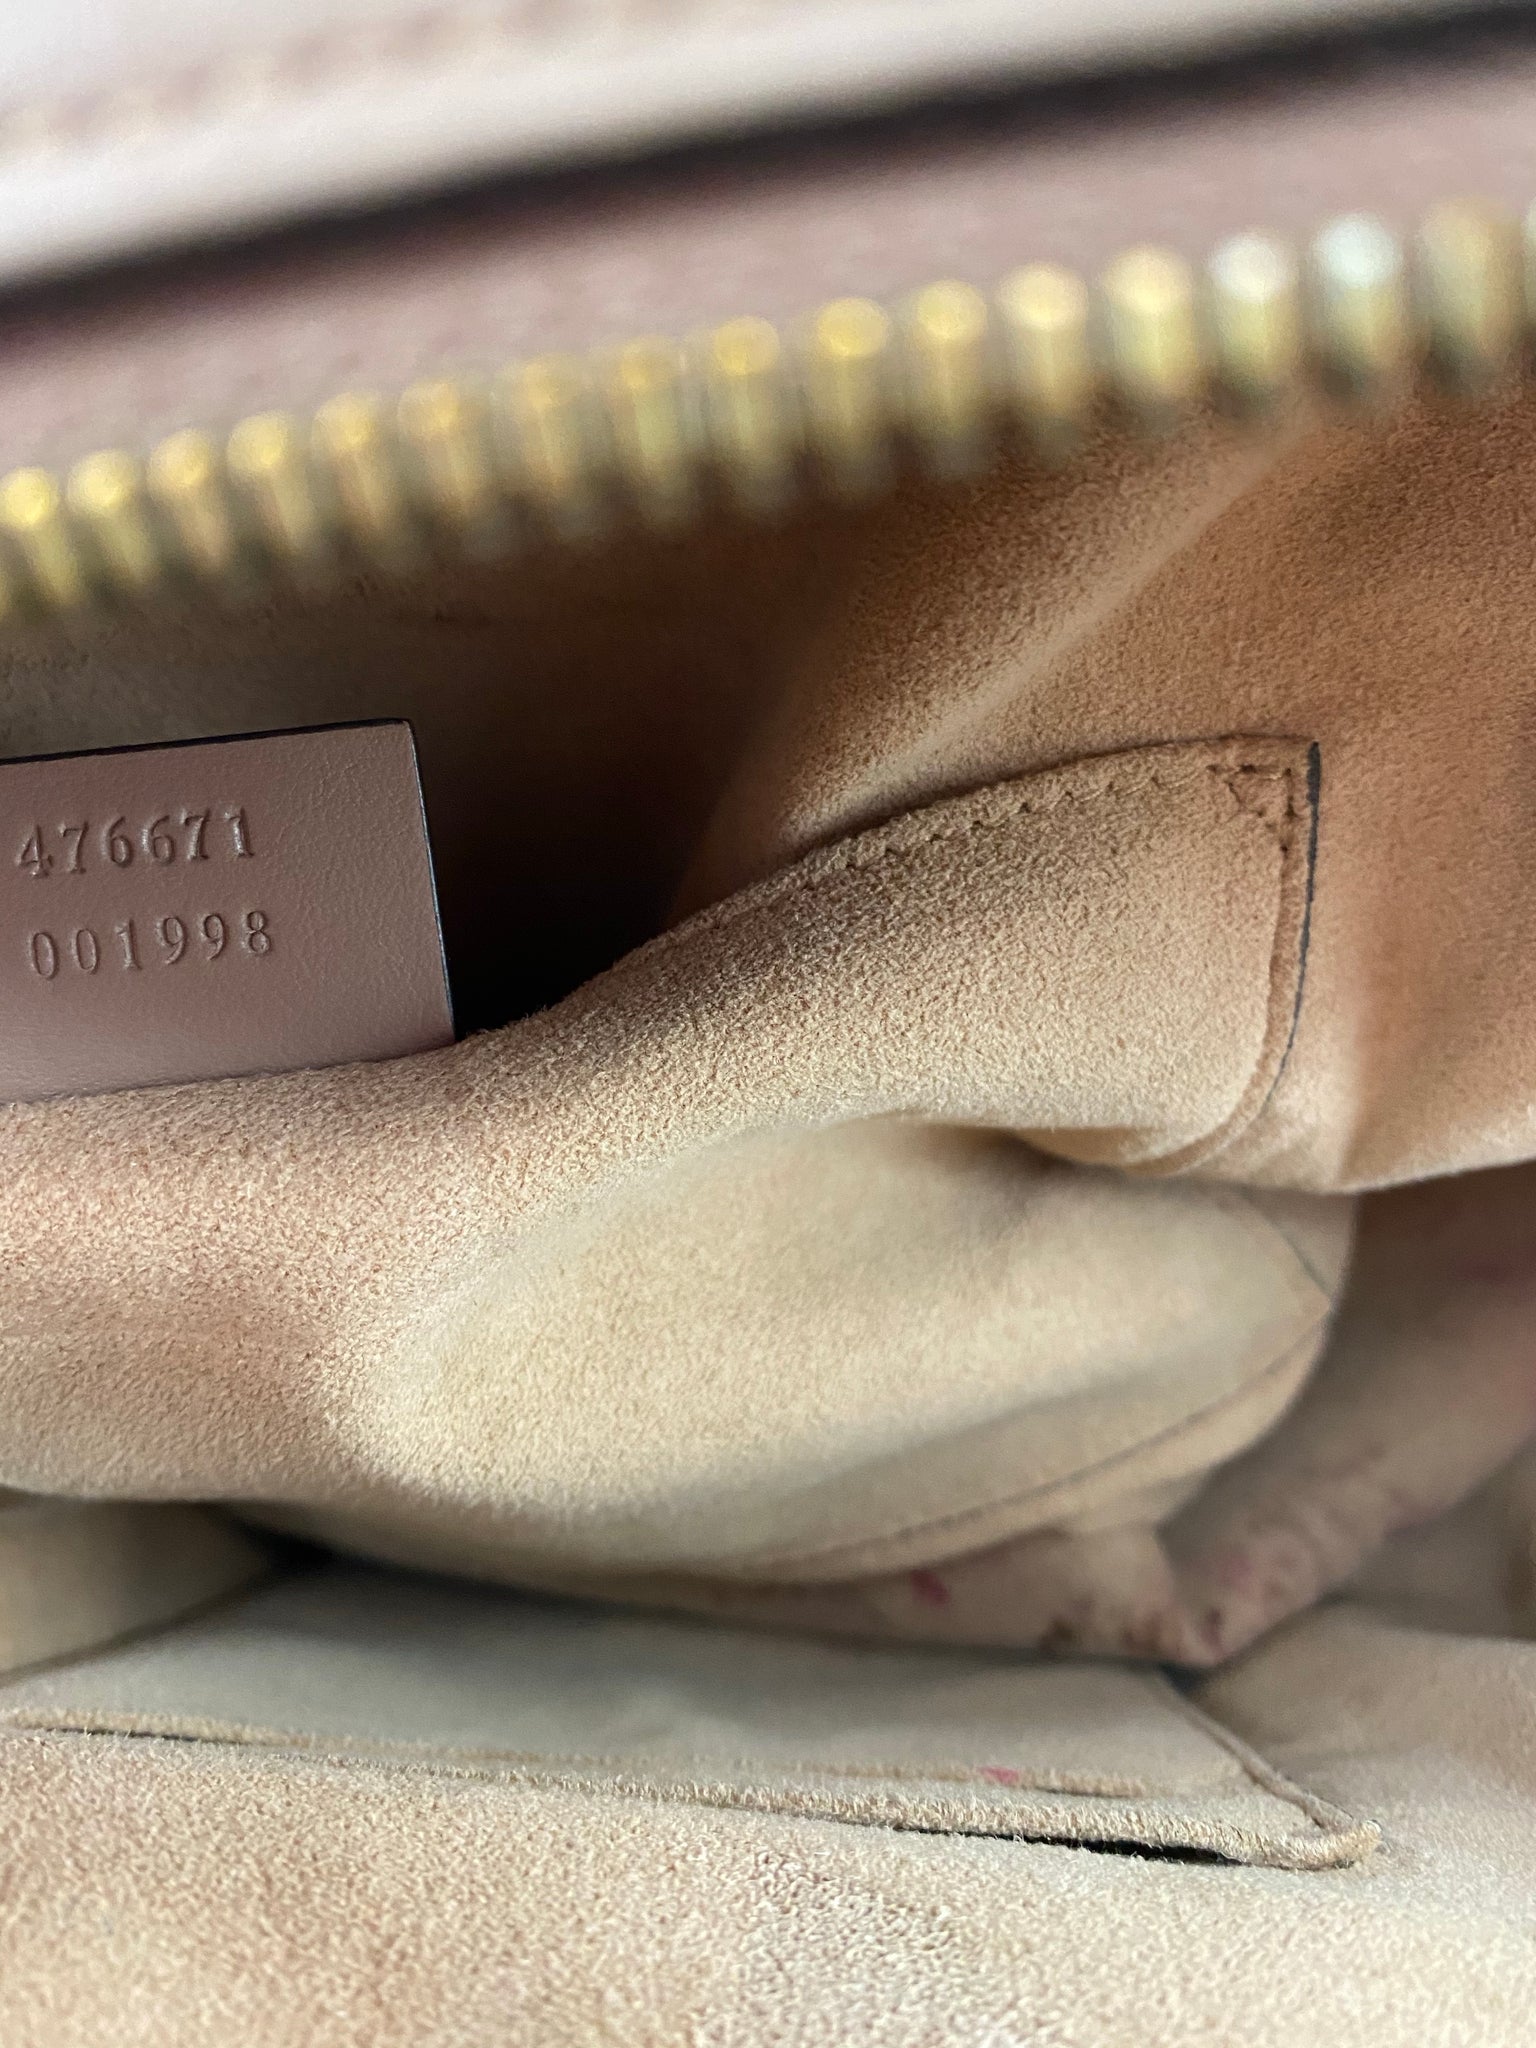 Gucci 476671 001998 GG Marmont Women's Beige Matelasse Leather